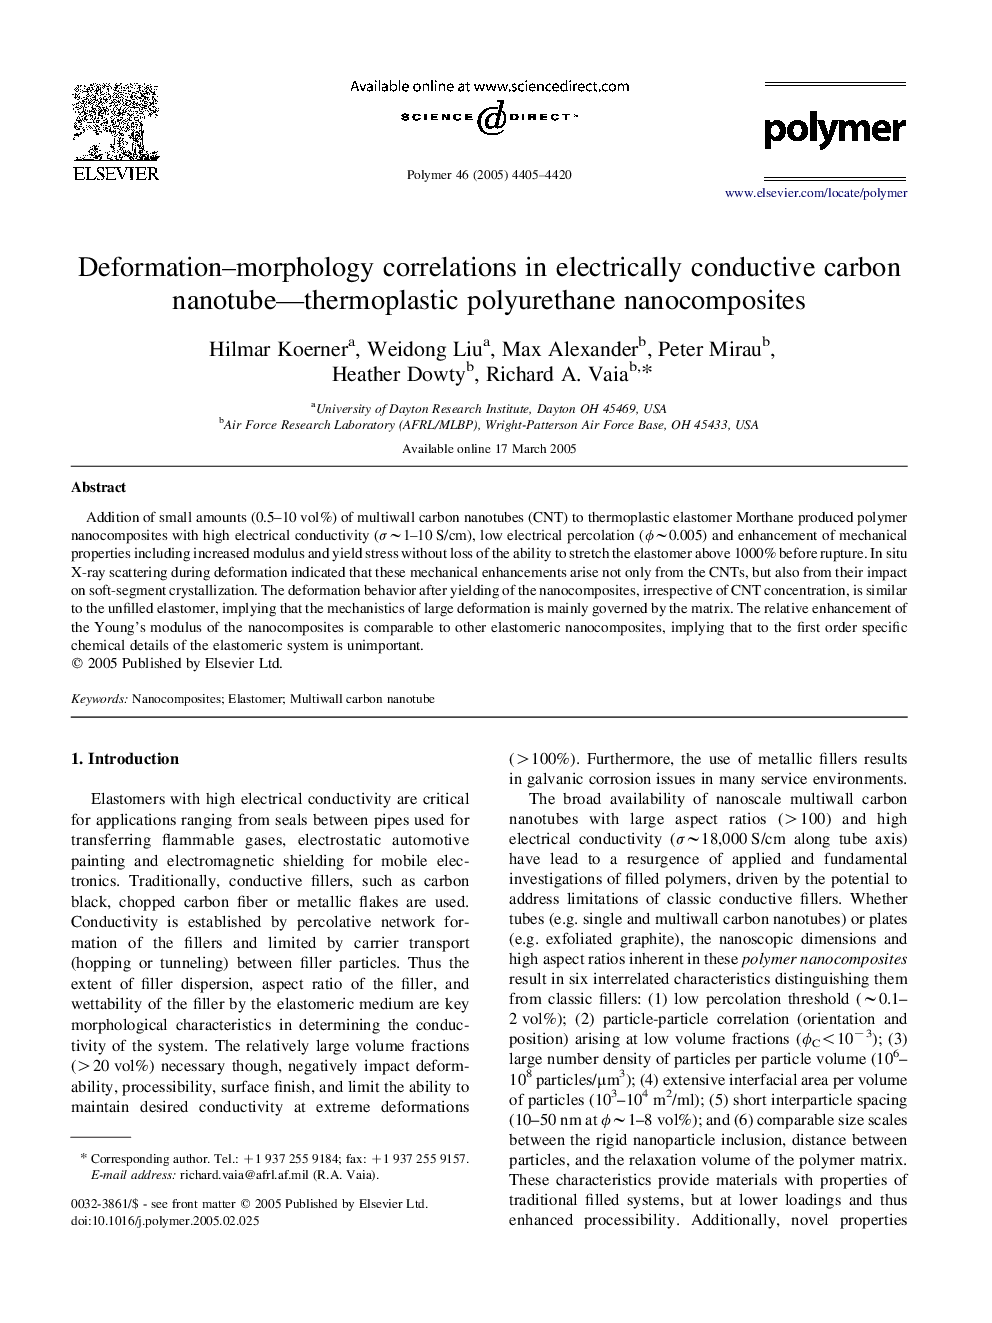 Deformation-morphology correlations in electrically conductive carbon nanotube-thermoplastic polyurethane nanocomposites